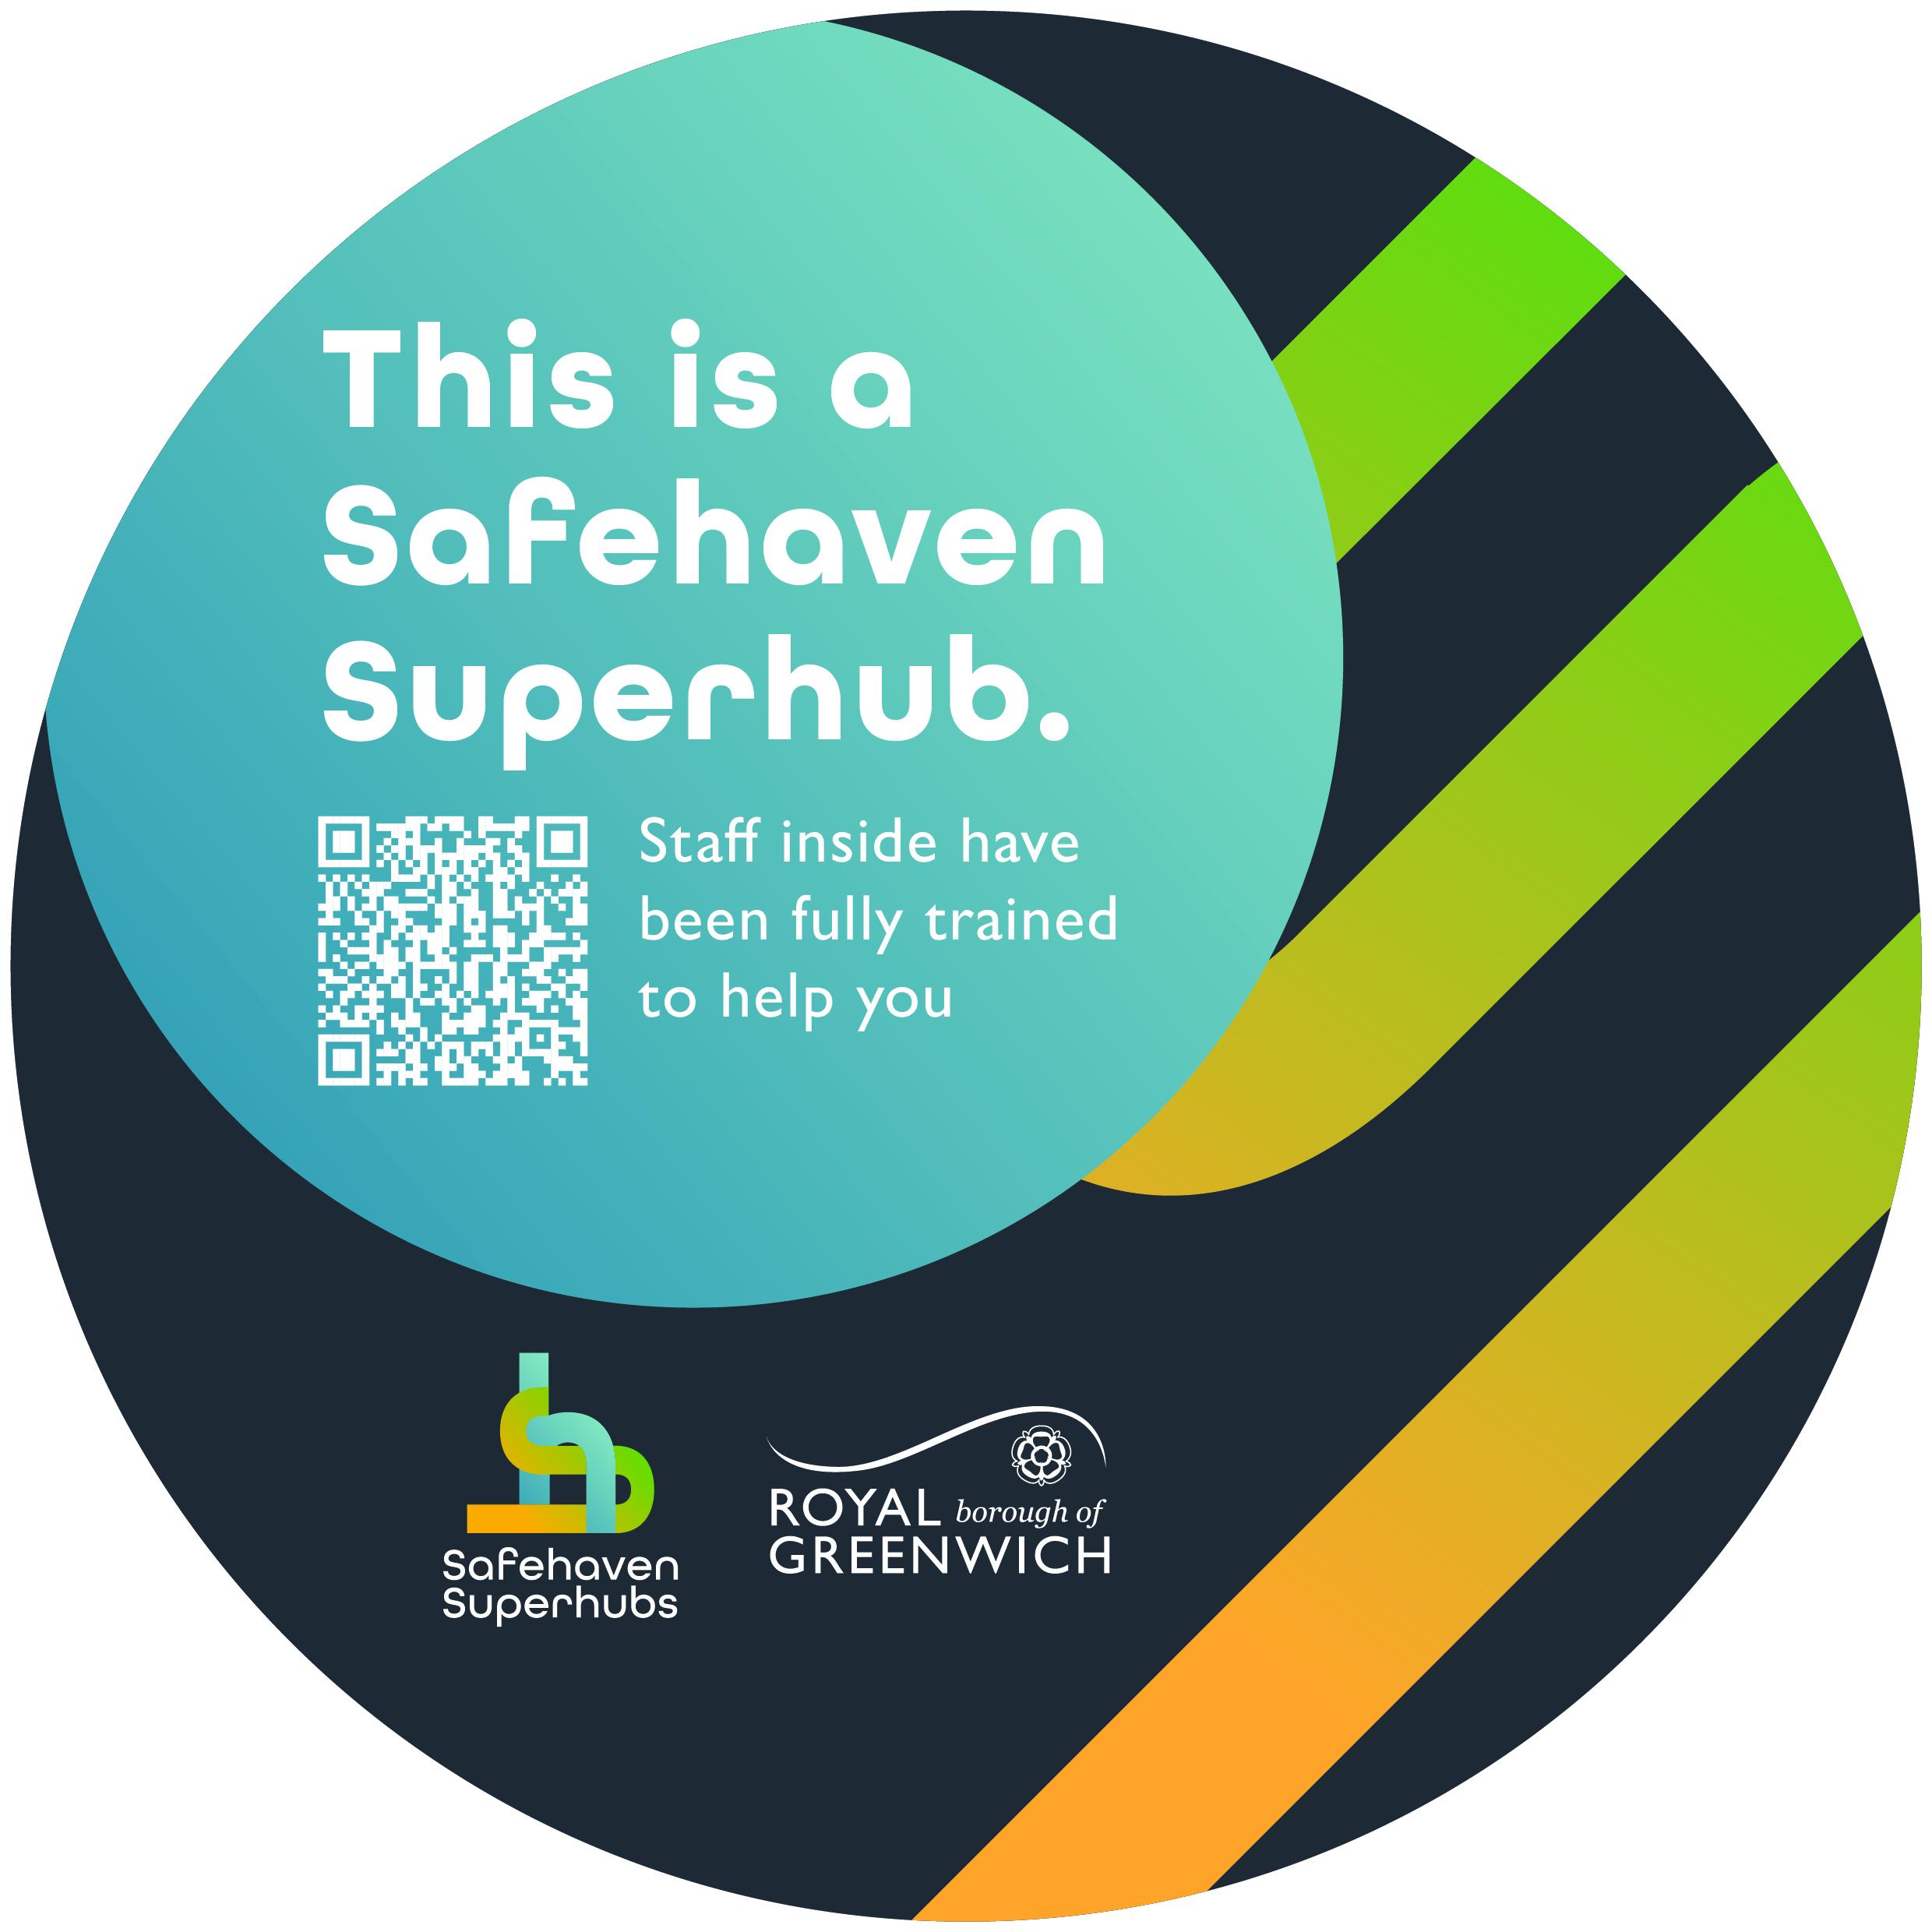 The Safehaven Superhub logo